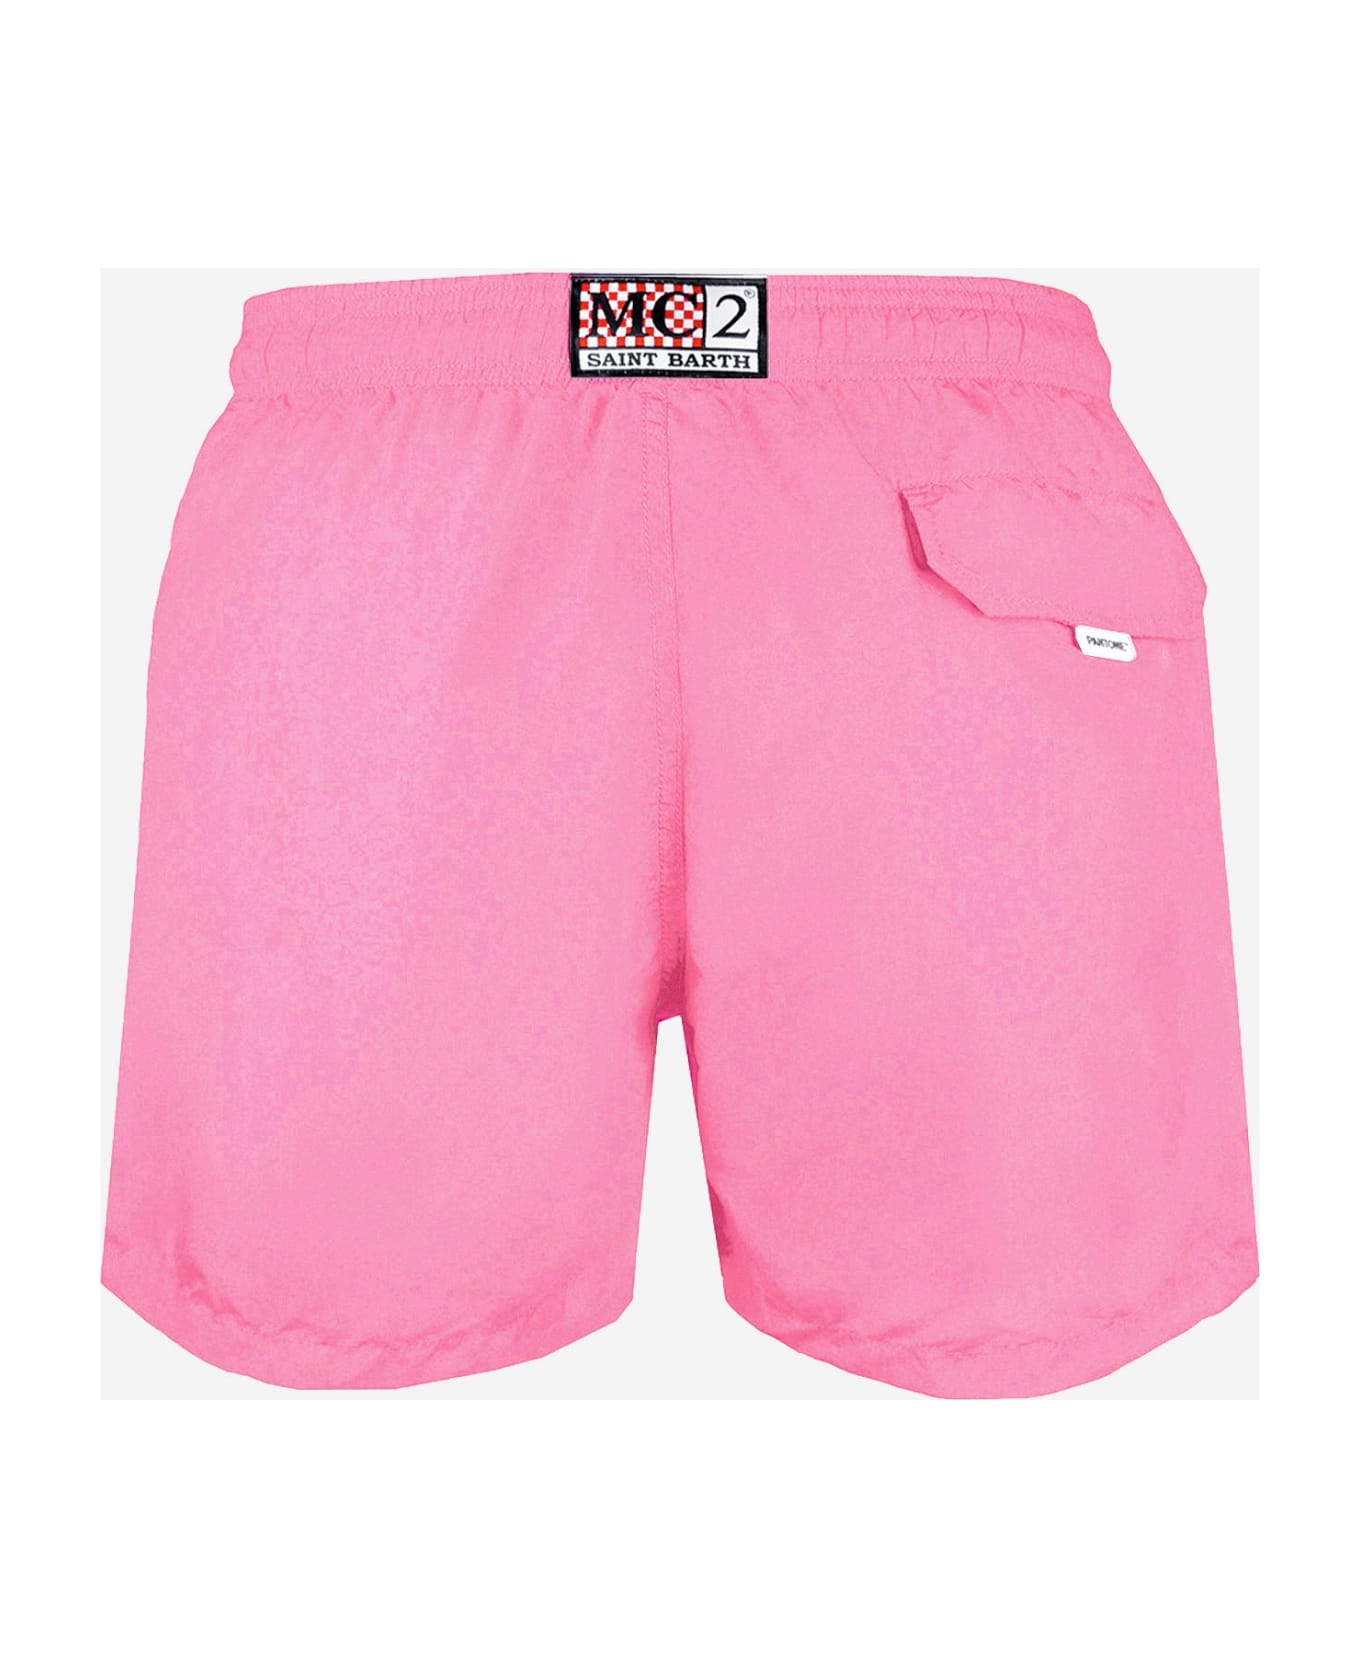 MC2 Saint Barth Man Pink Swim Shorts | Pantone Special Edition - PINK スイムトランクス